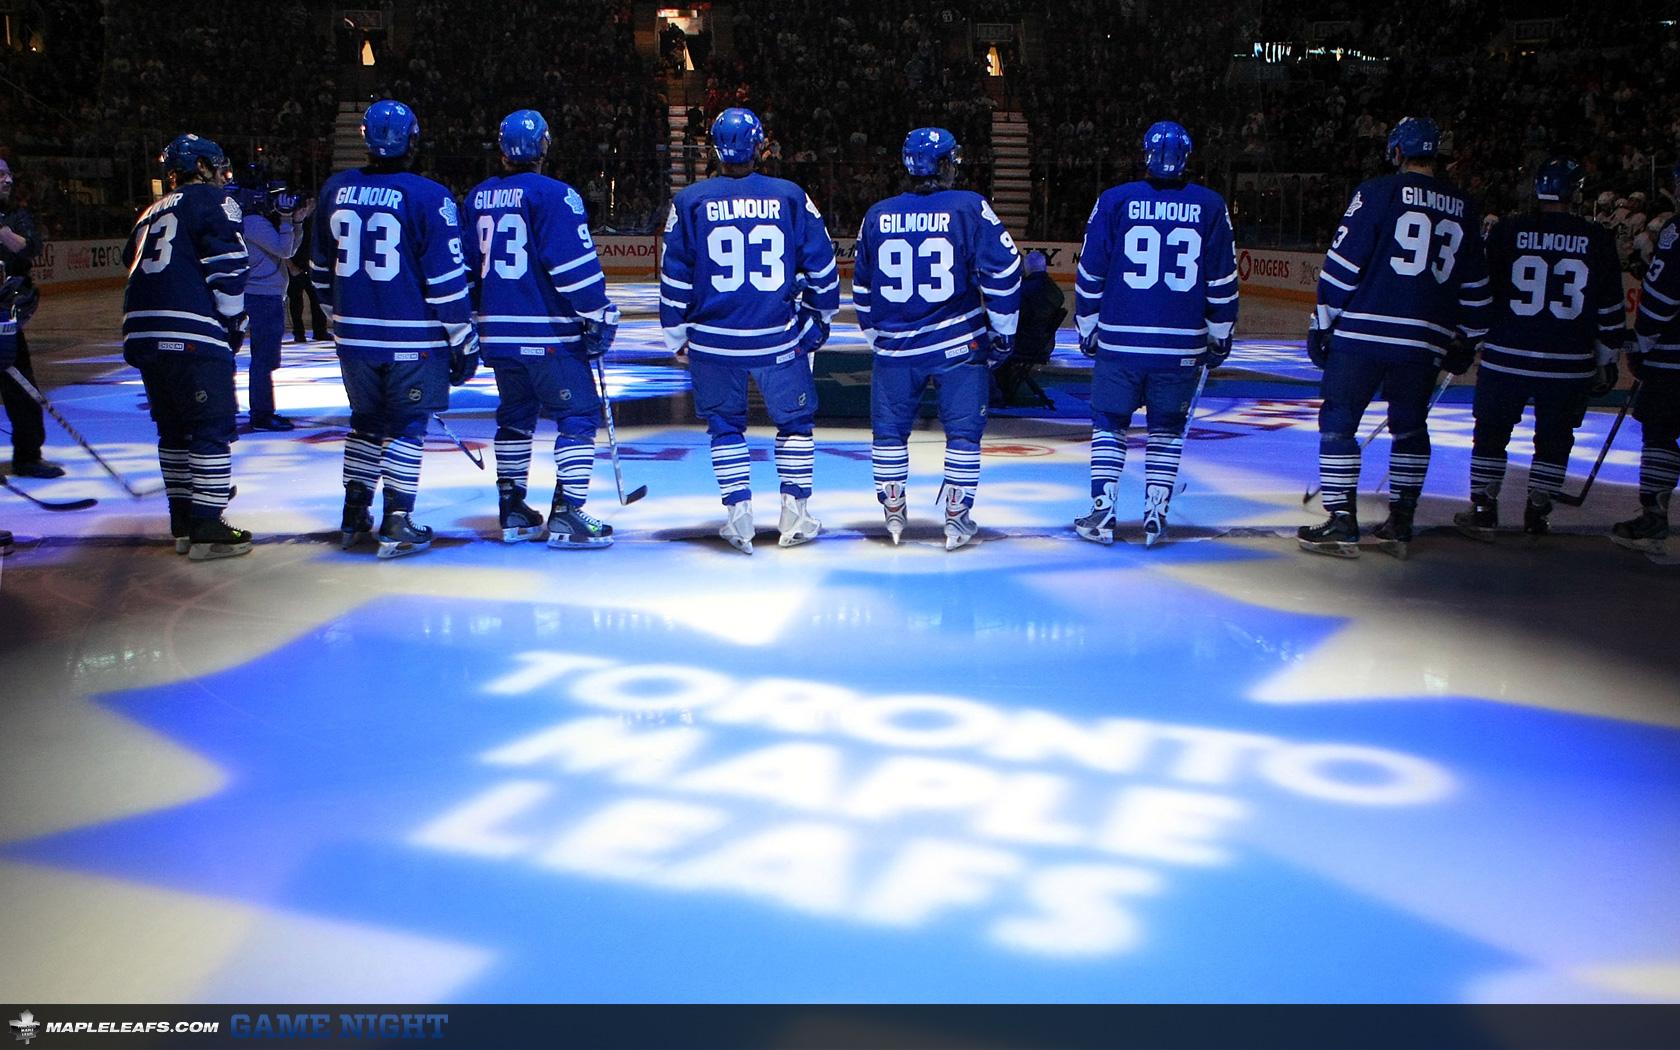 Toronto Maple Leafs Wallpaper Q5D1M, 593.86 Kb